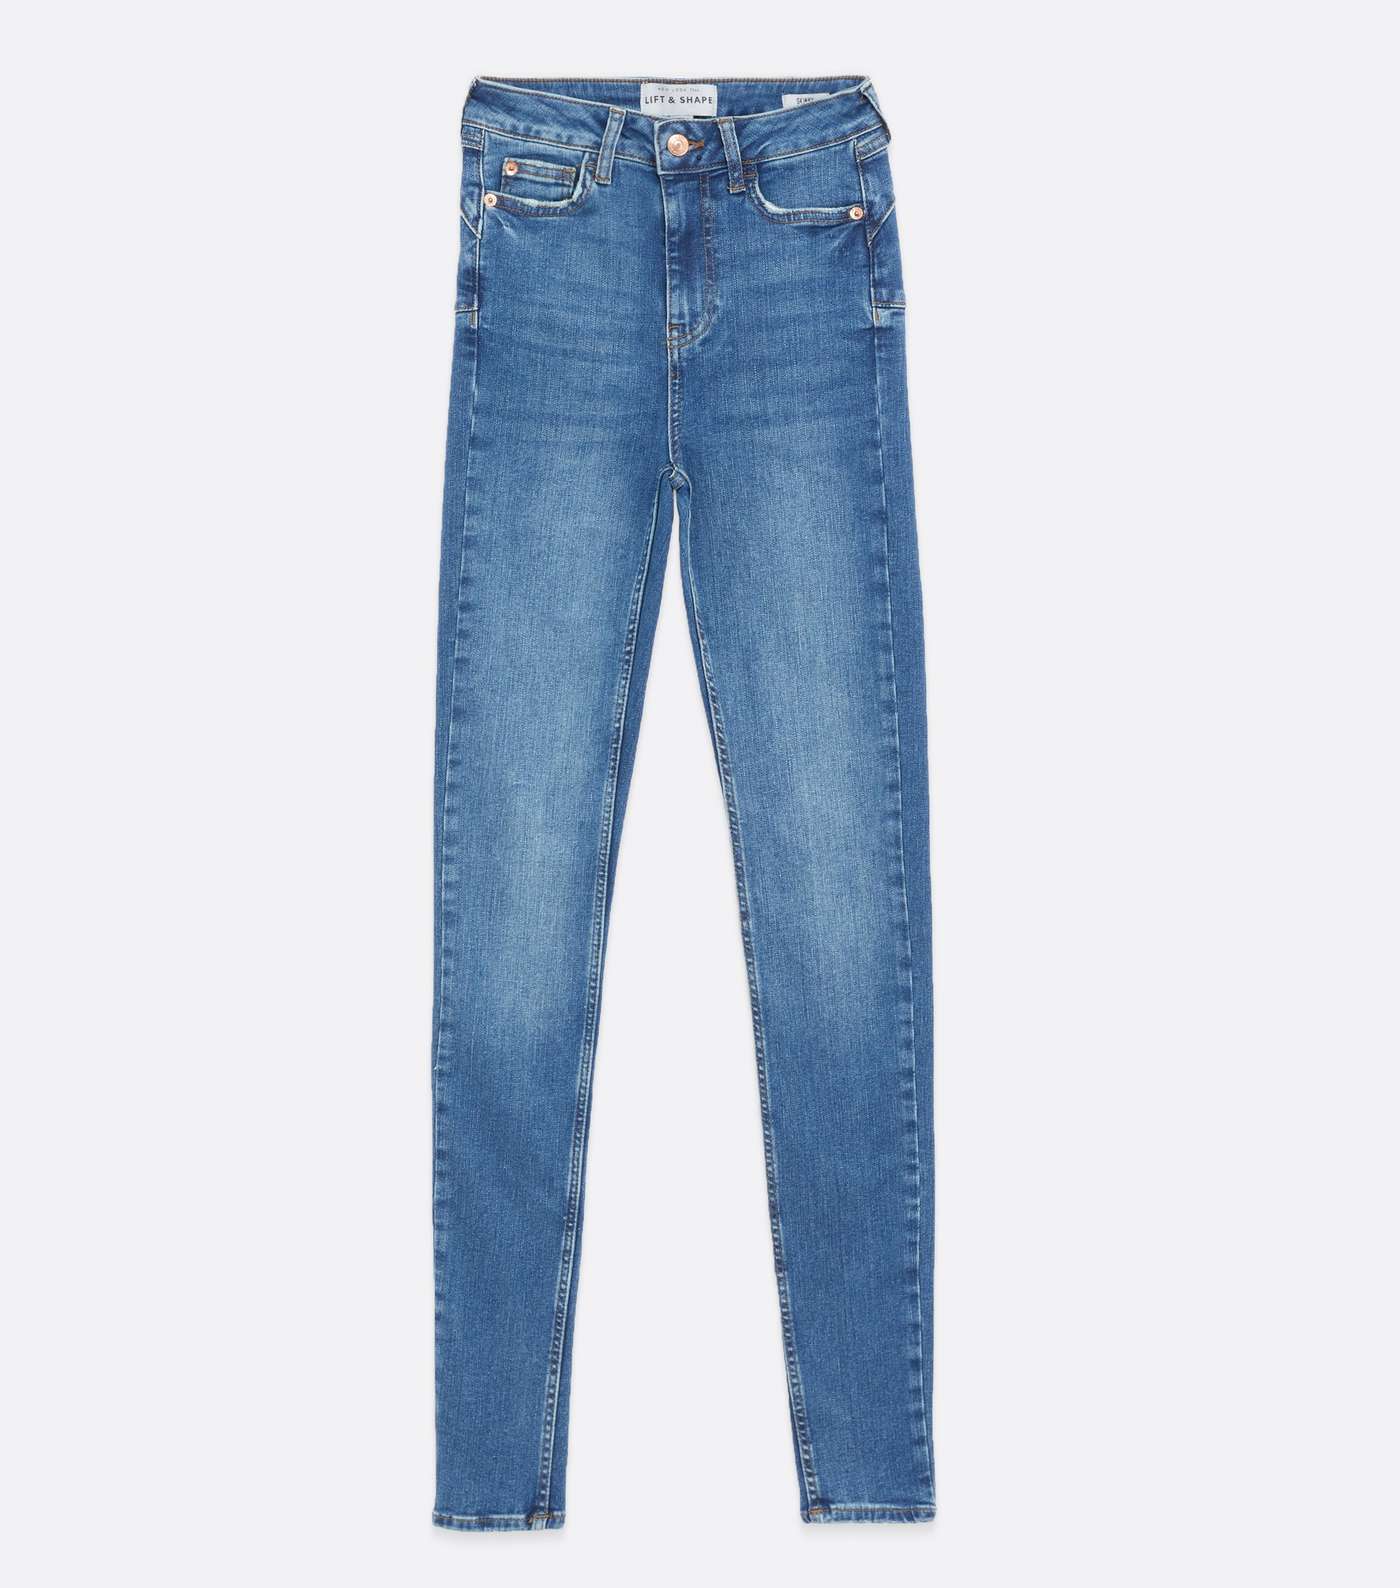 Tall Blue 'Lift & Shape' Jenna Skinny Jeans Image 5